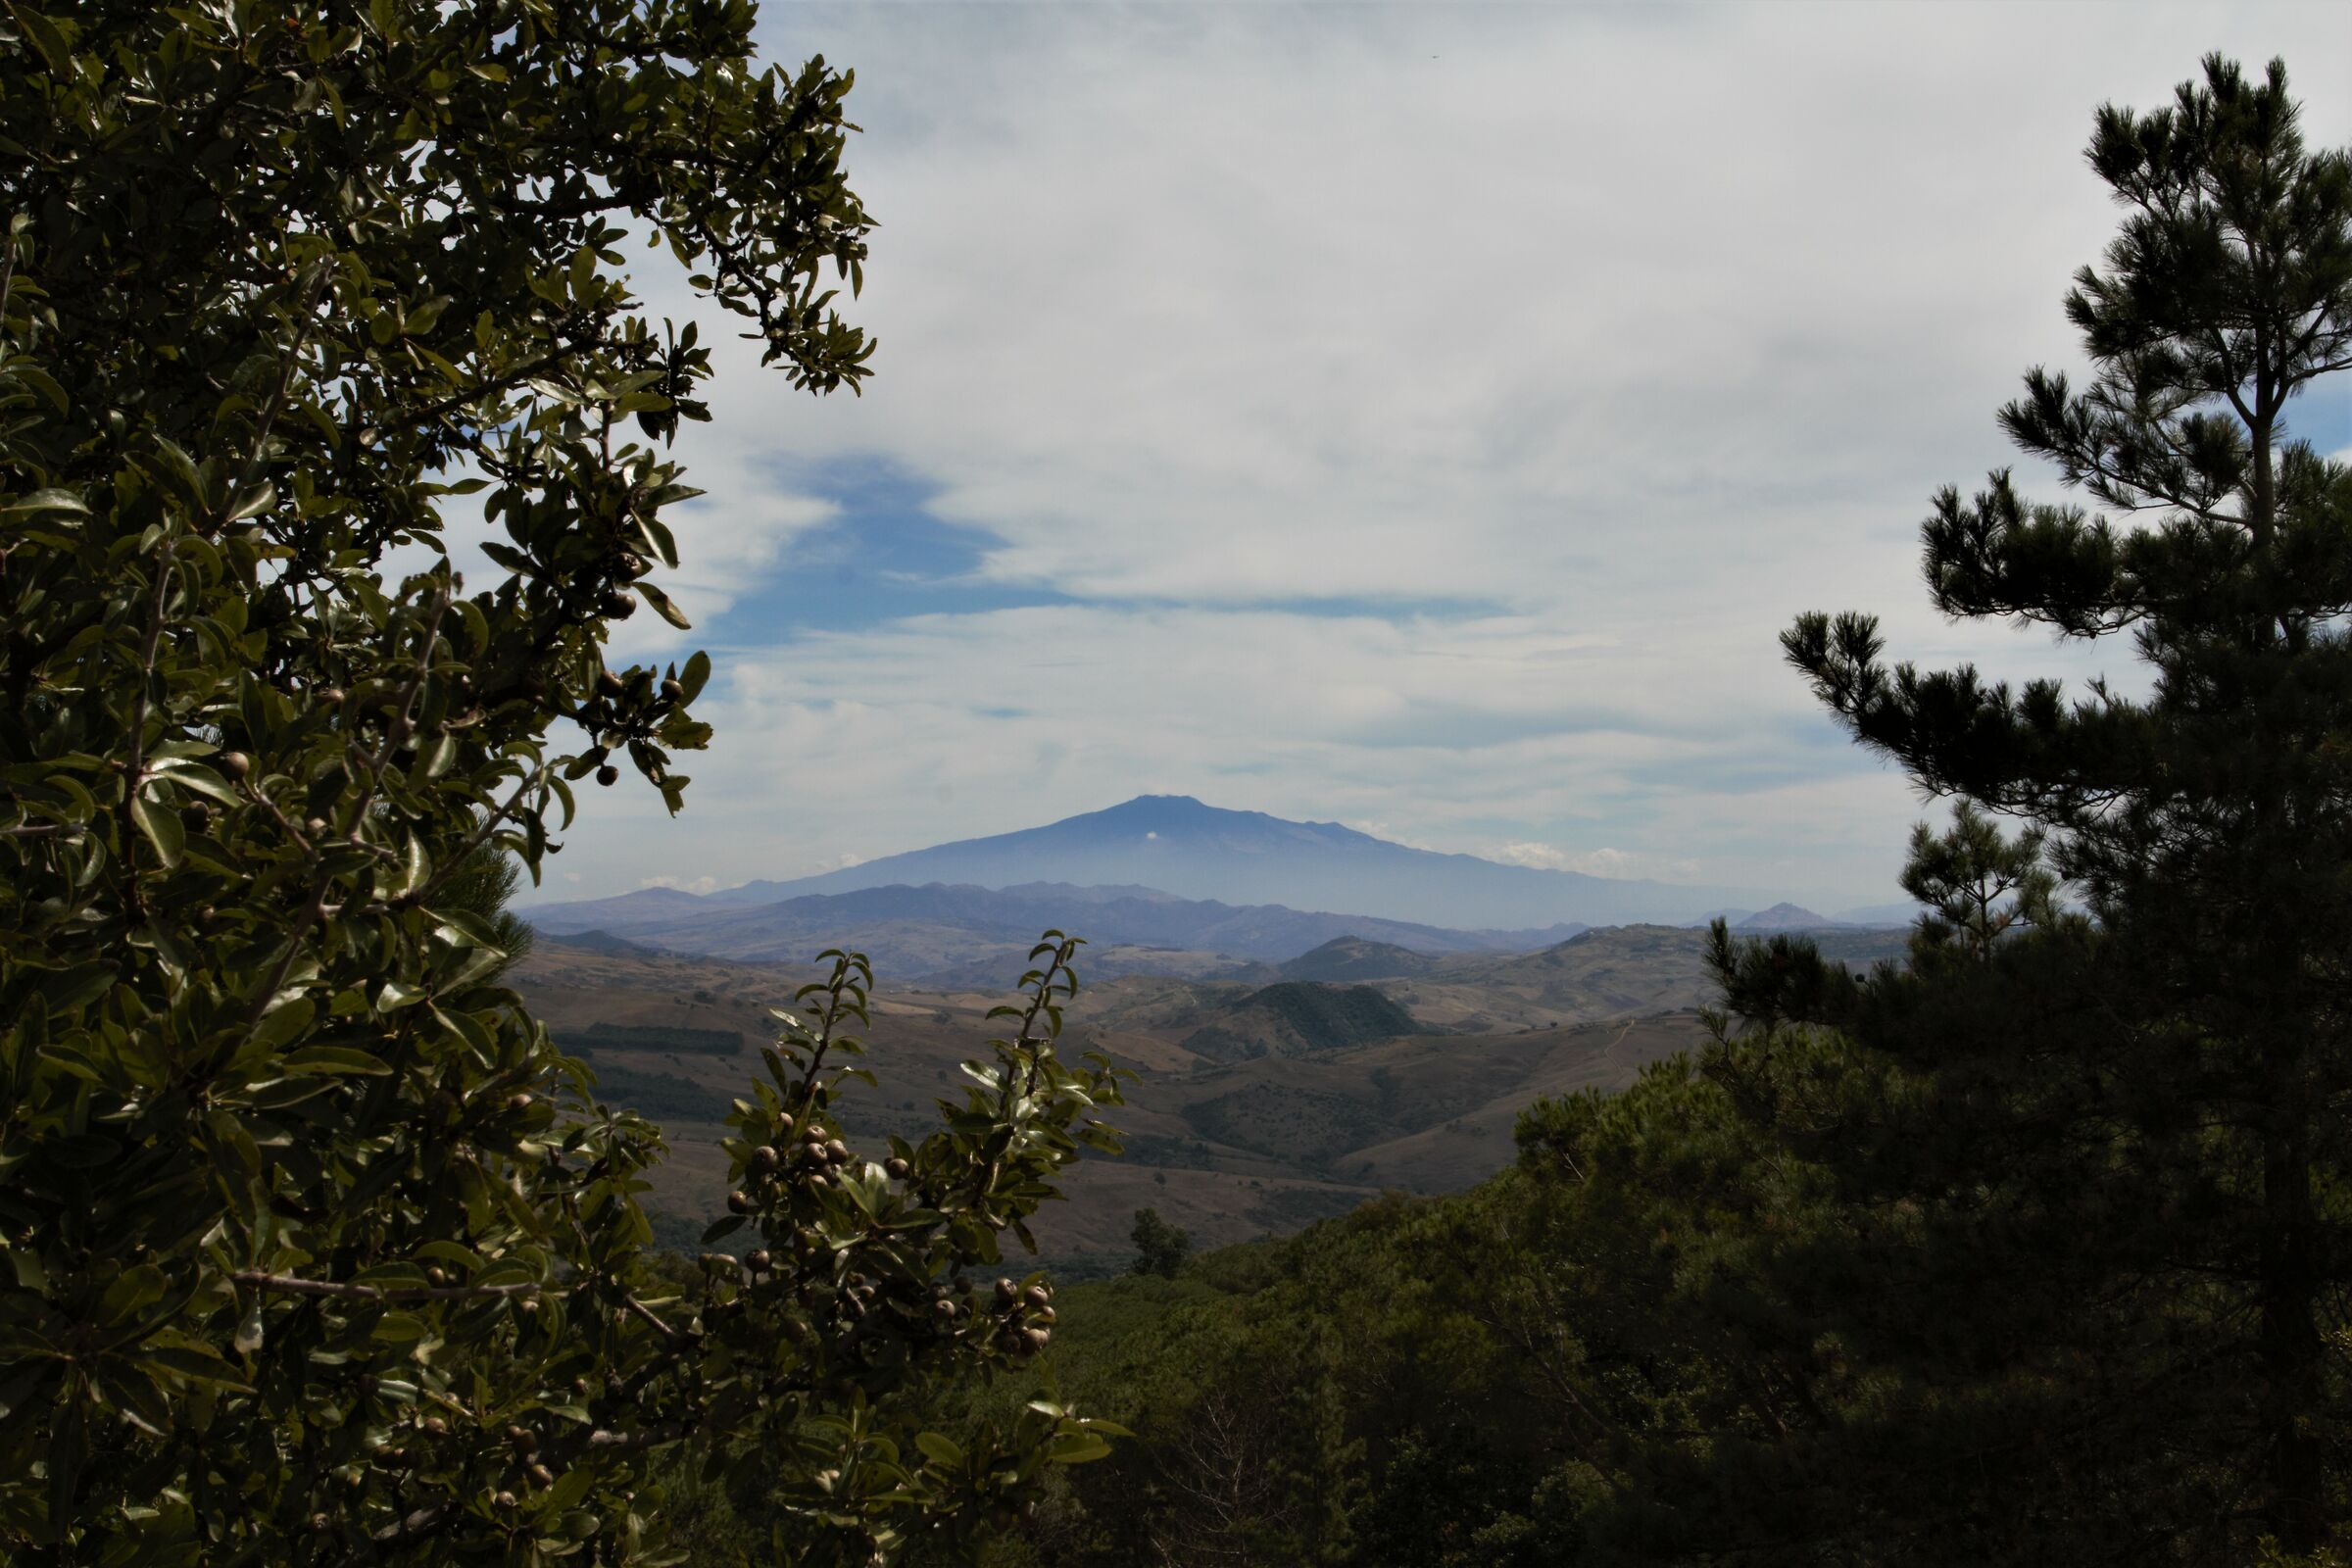 Mount Etna as seen from Mount Altesina...